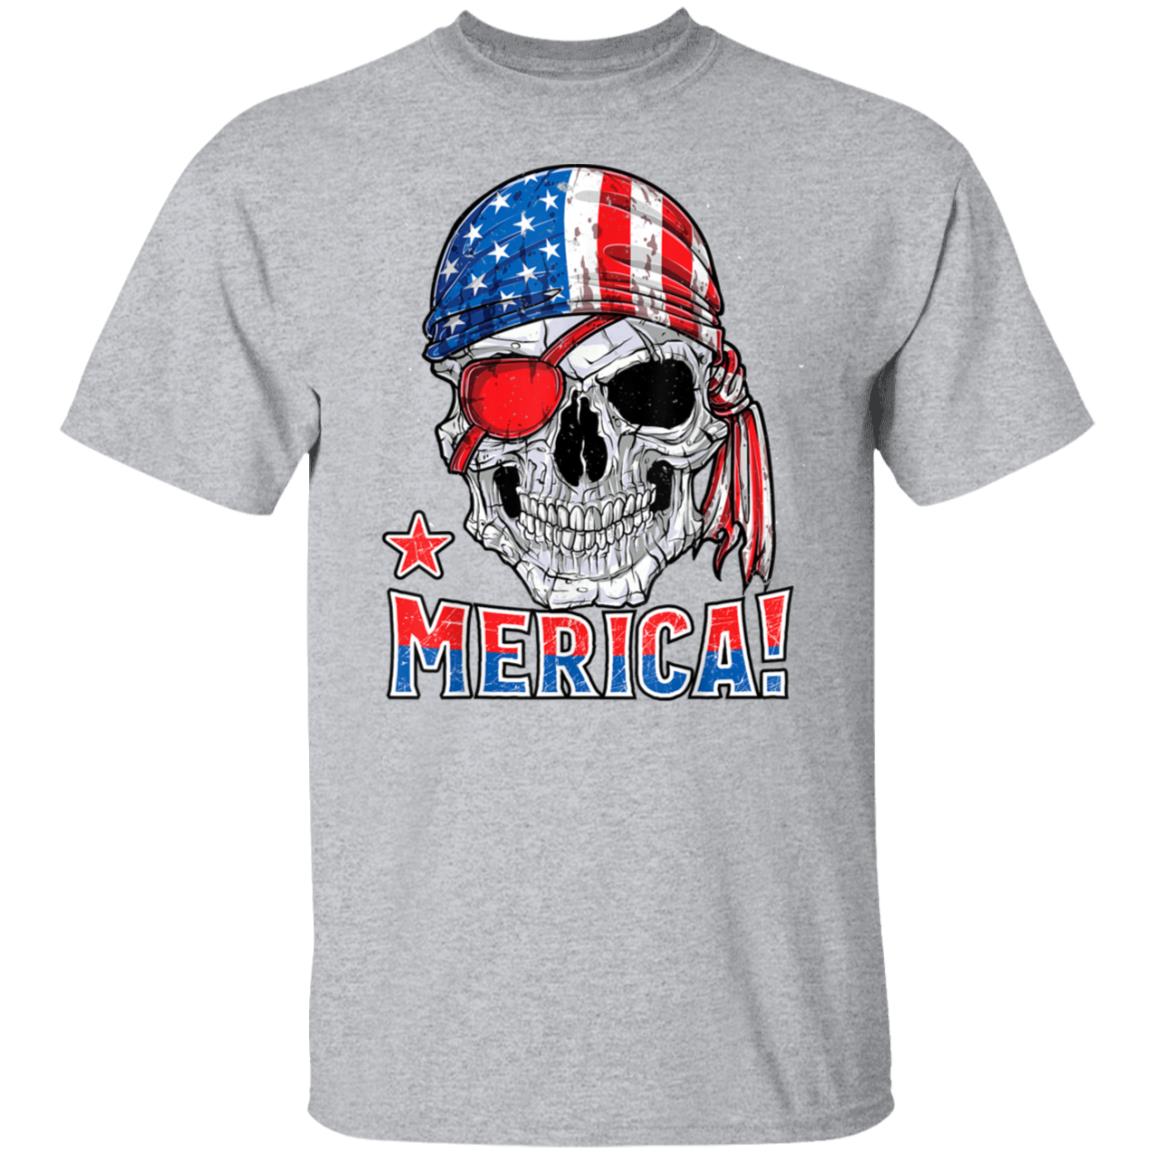 Pirate Merica 4th of July T shirt Men Skull American Flag